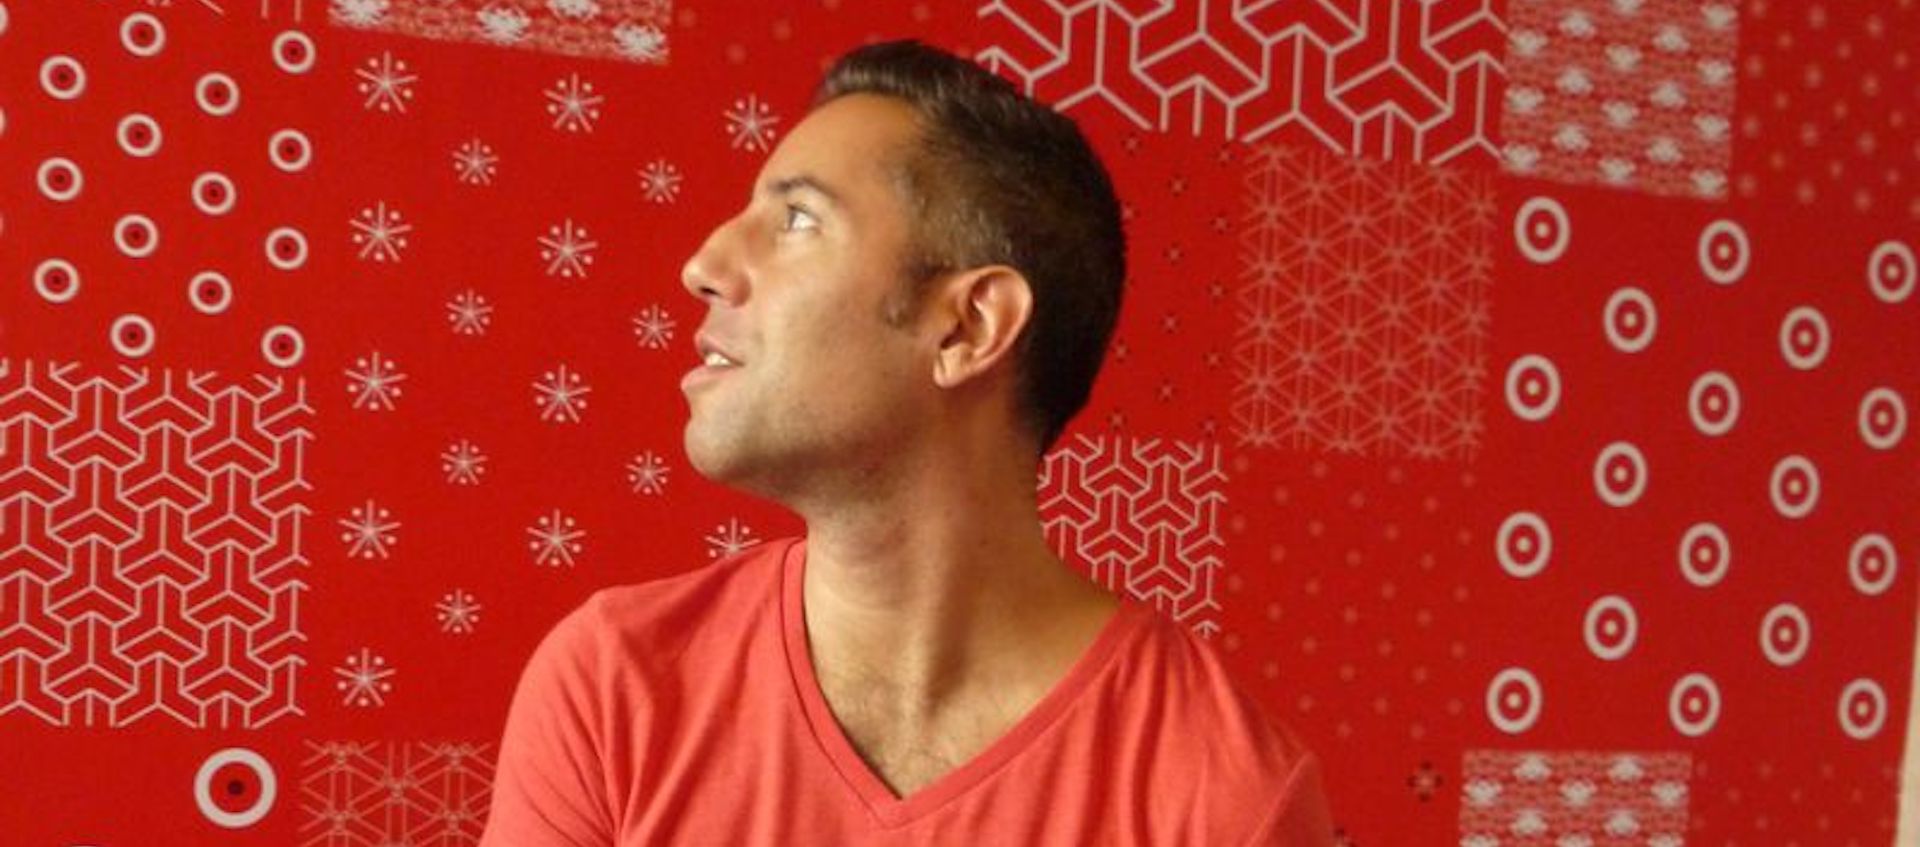 Artist Glenn Belverio, seen in profile against a red bandana-printed backdrop